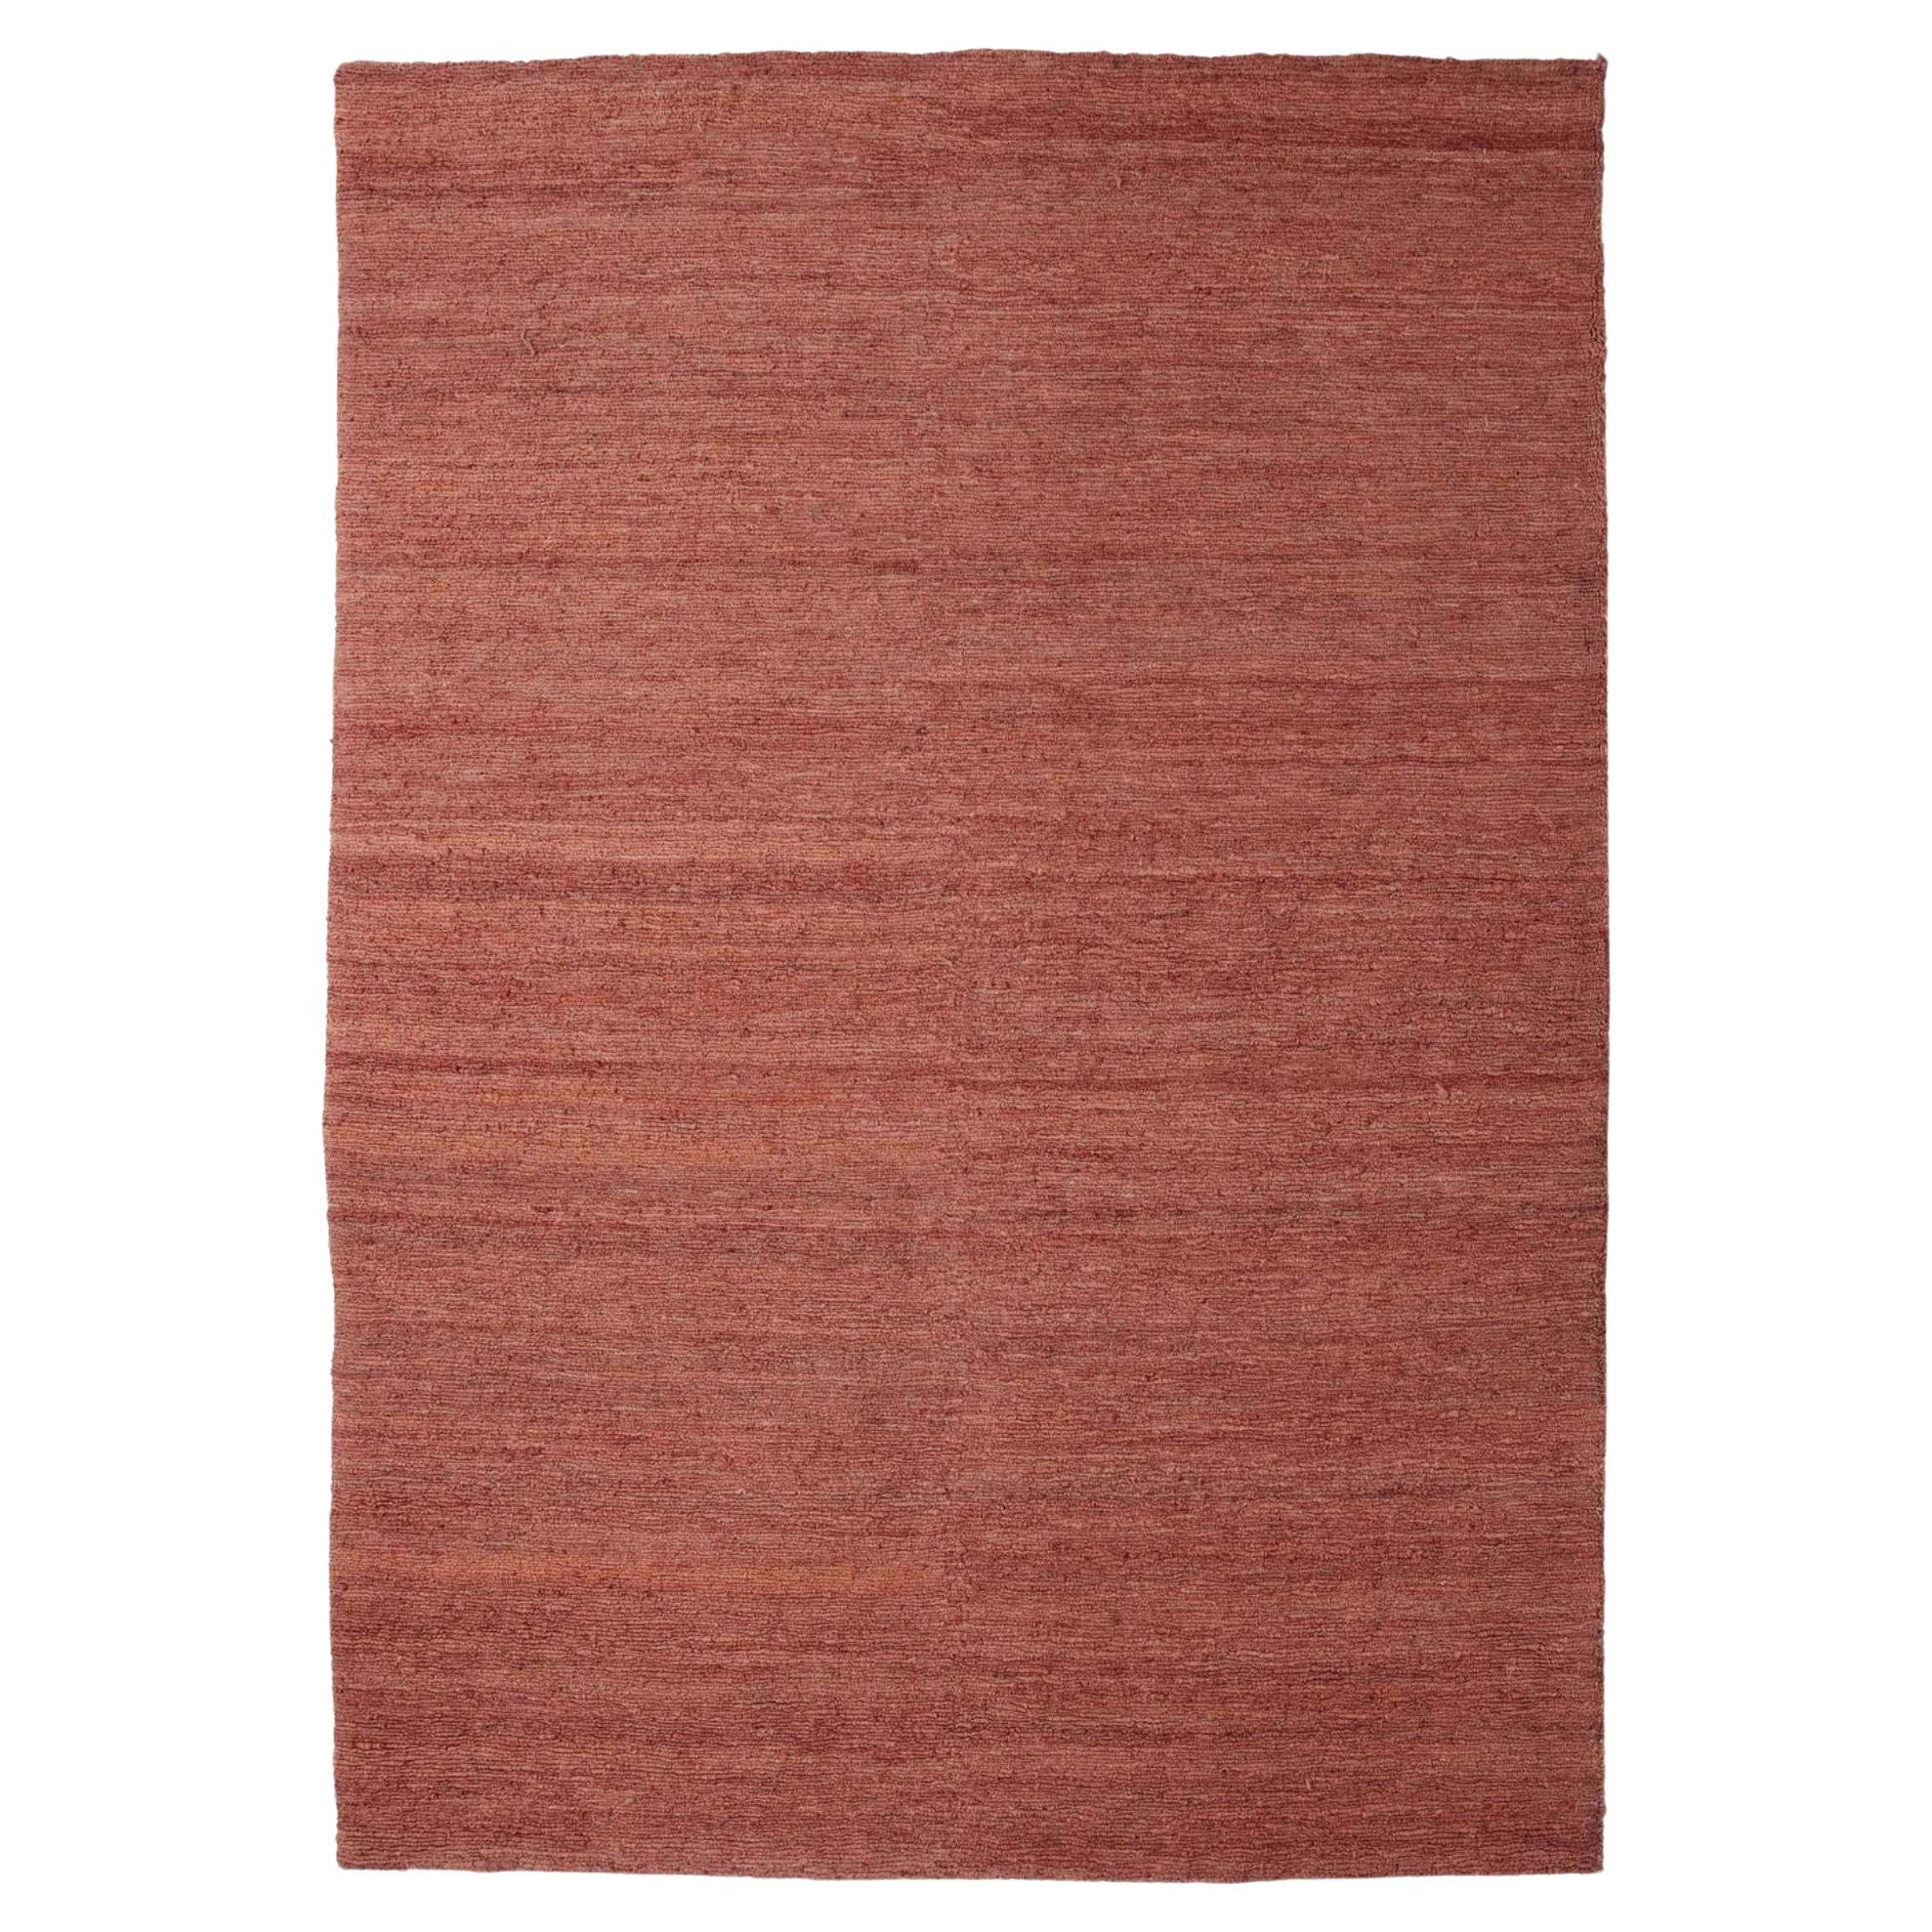 Nanimarquina „Earth“ Teppich aus handgesponnener Jute in „Terracotta“ 250x350cm